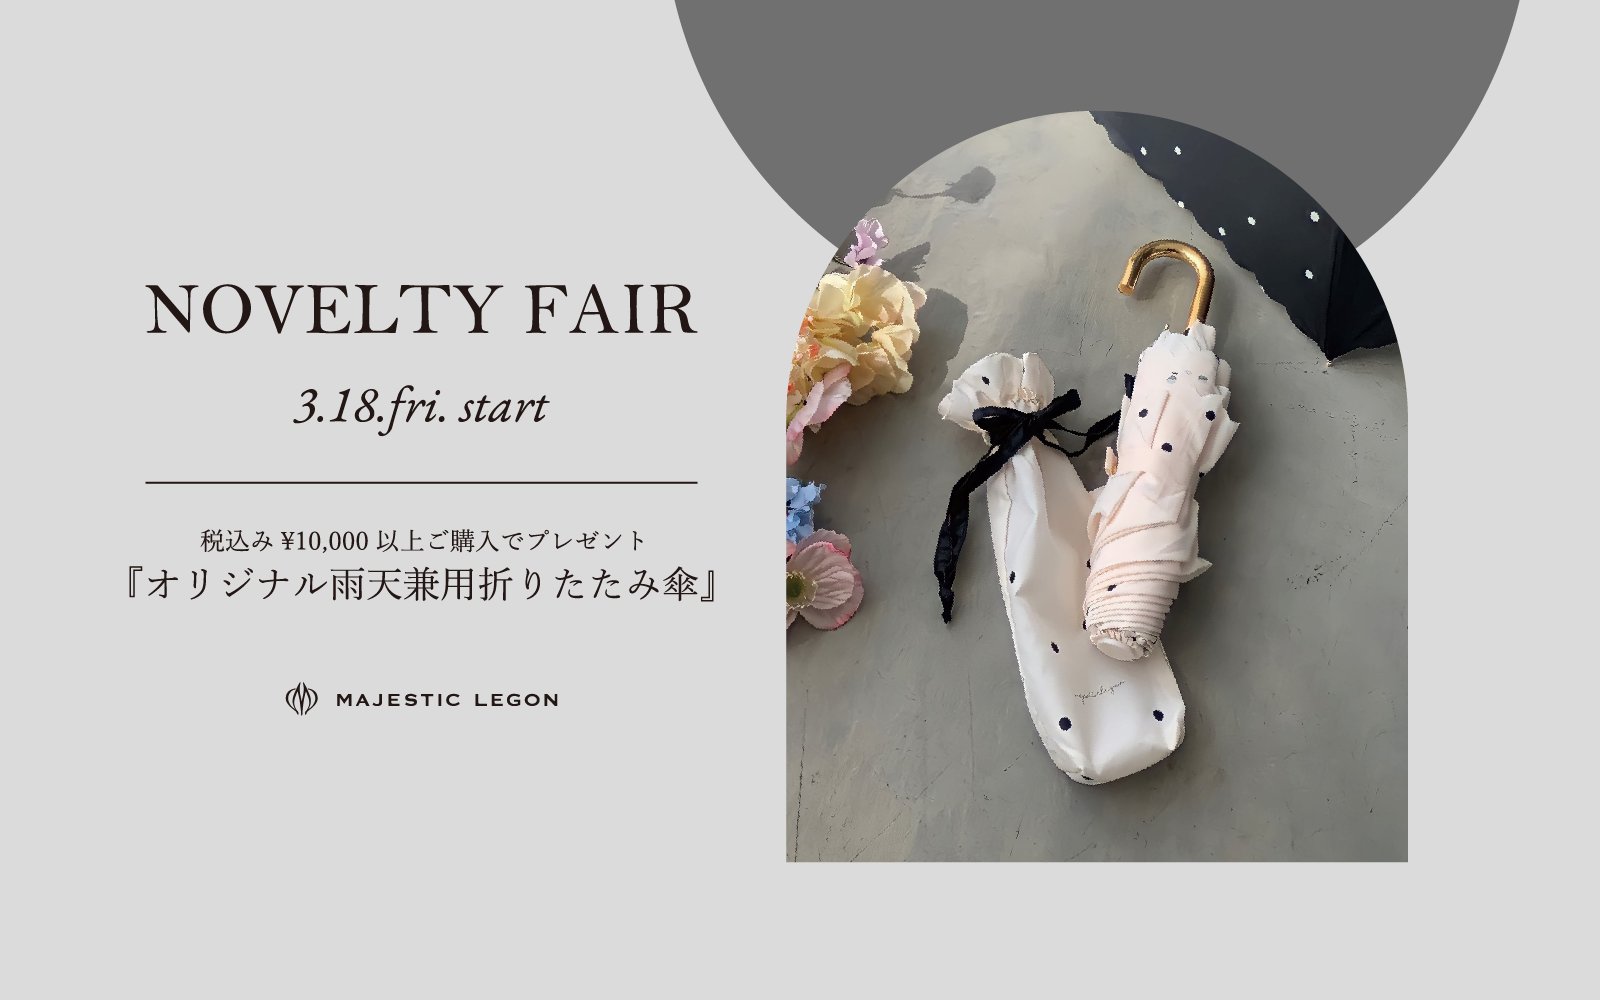 Novelty Fair ”オリジナル雨天兼用折りたたみ傘” プレゼント♡3.18.fri.START！